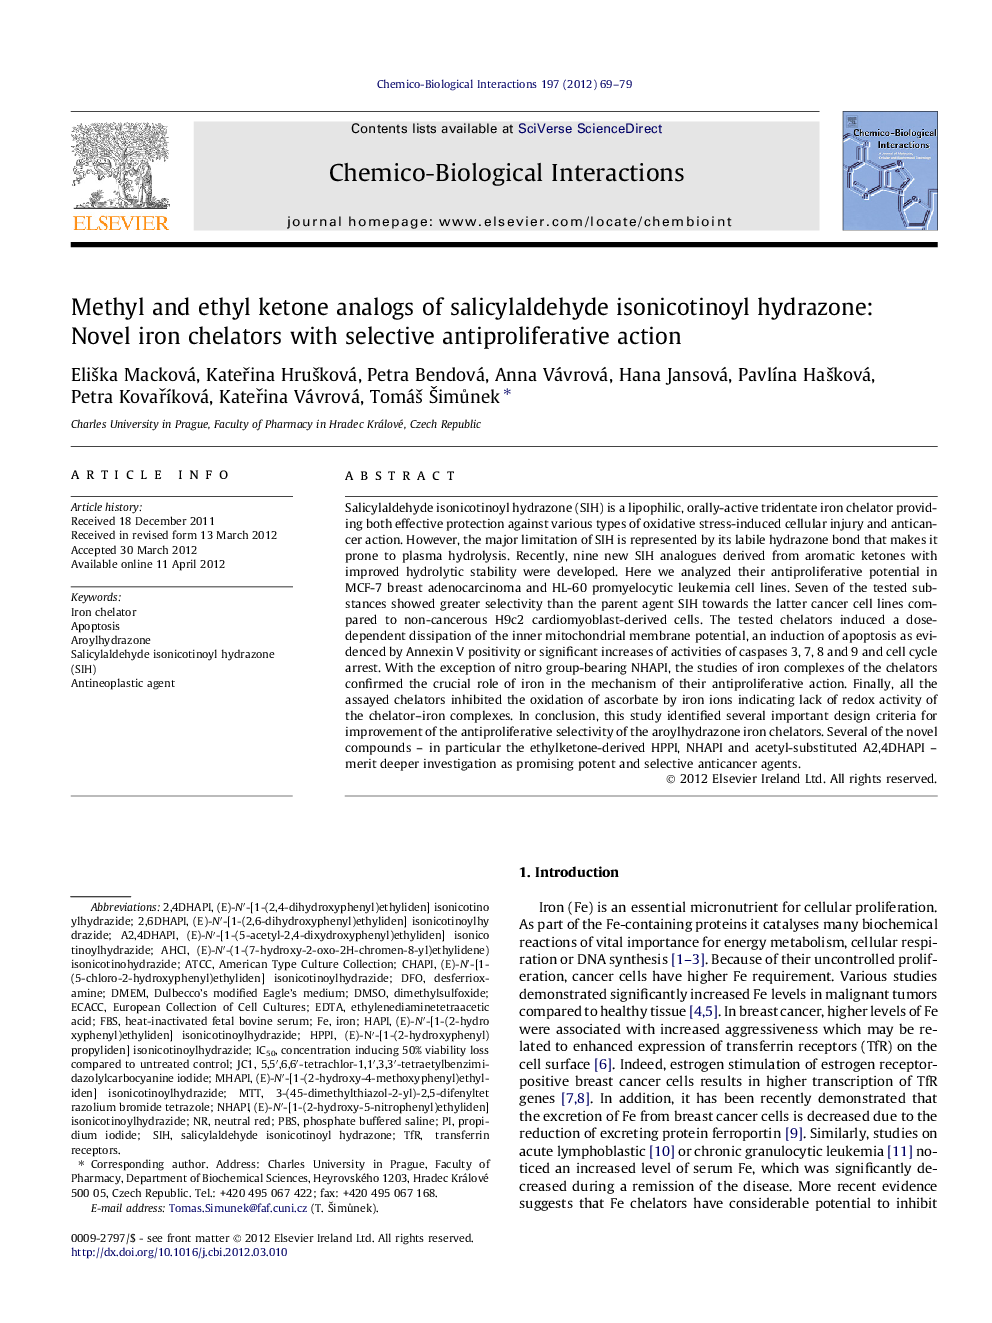 Methyl and ethyl ketone analogs of salicylaldehyde isonicotinoyl hydrazone: Novel iron chelators with selective antiproliferative action